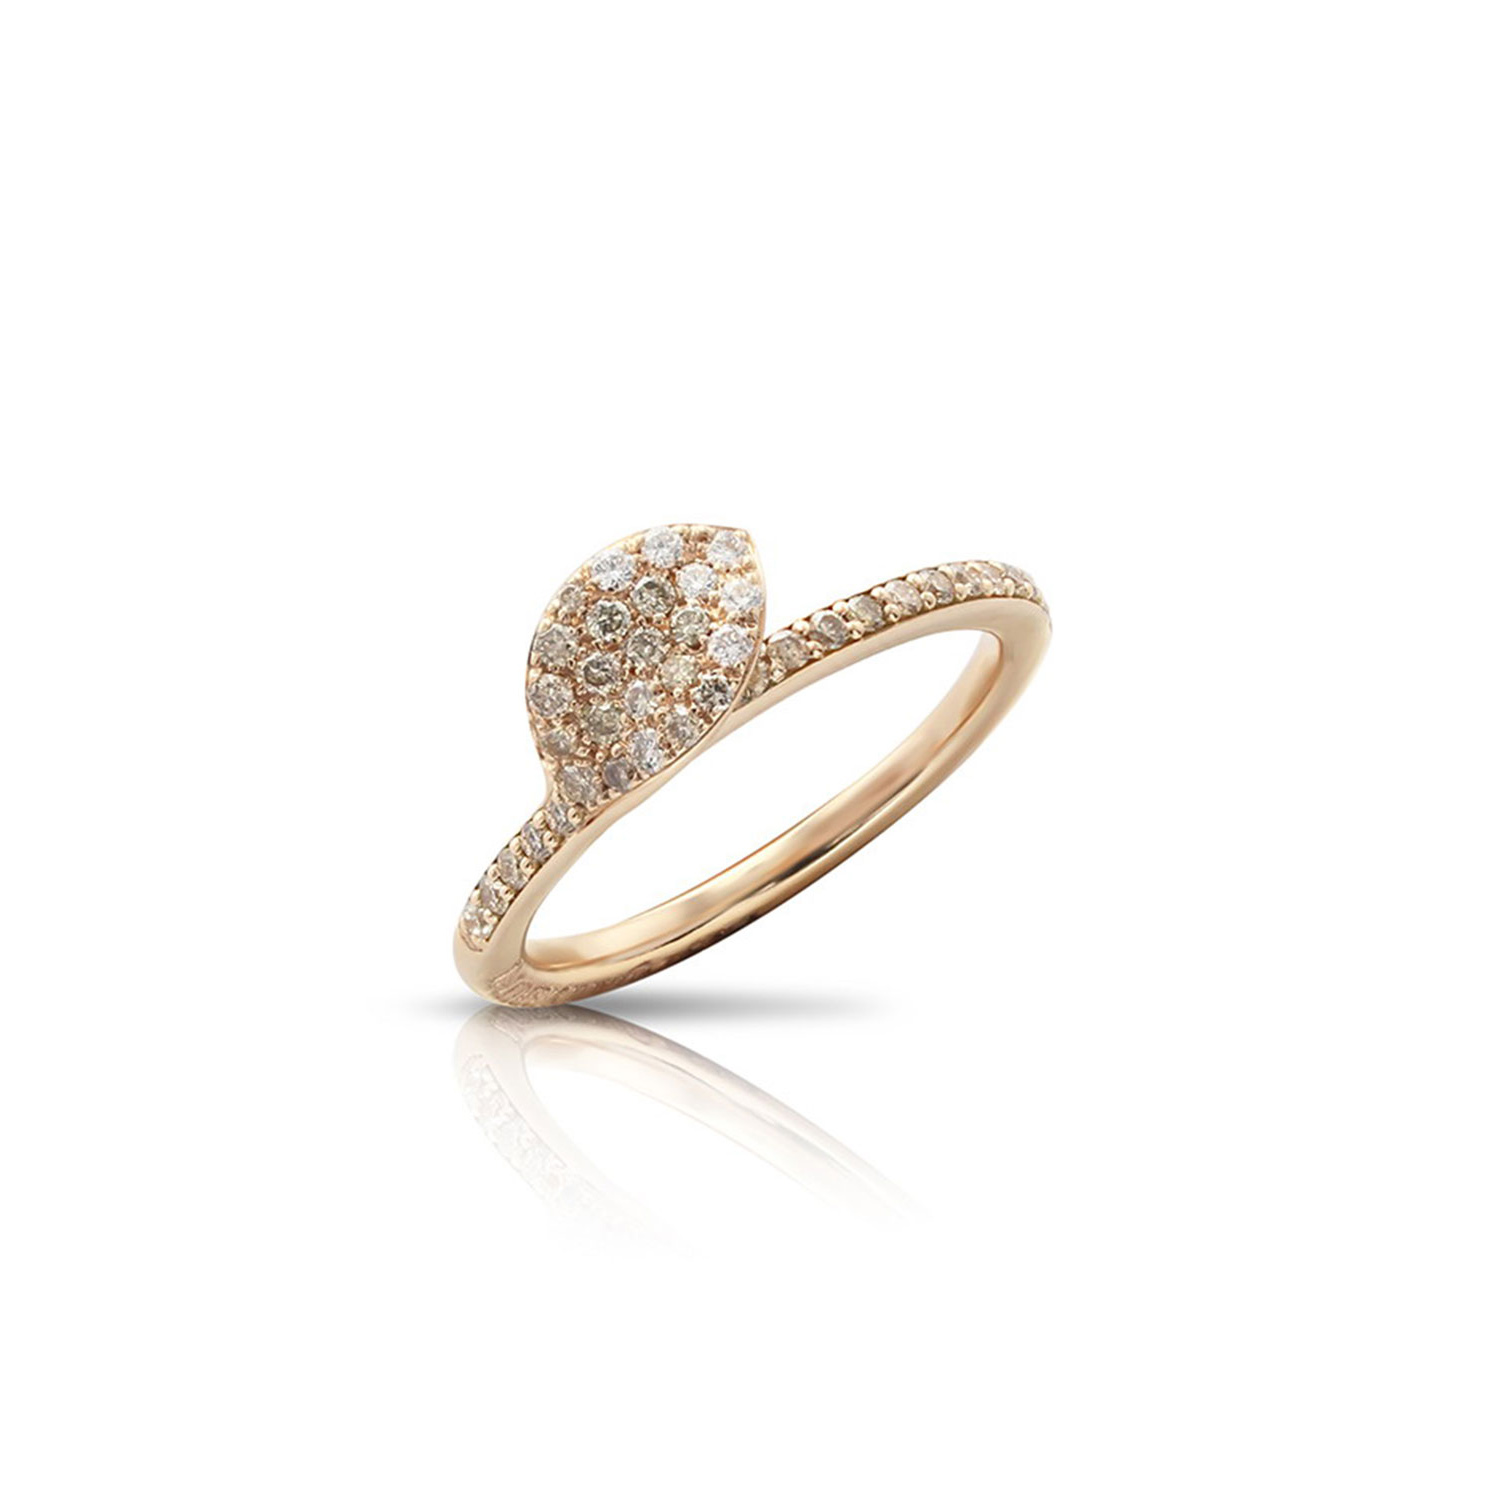 Wholwsale OEM/ODM Jewelry Custom 18k Rose Gold Diamond Leaf Ring women’s fine jewelry designer